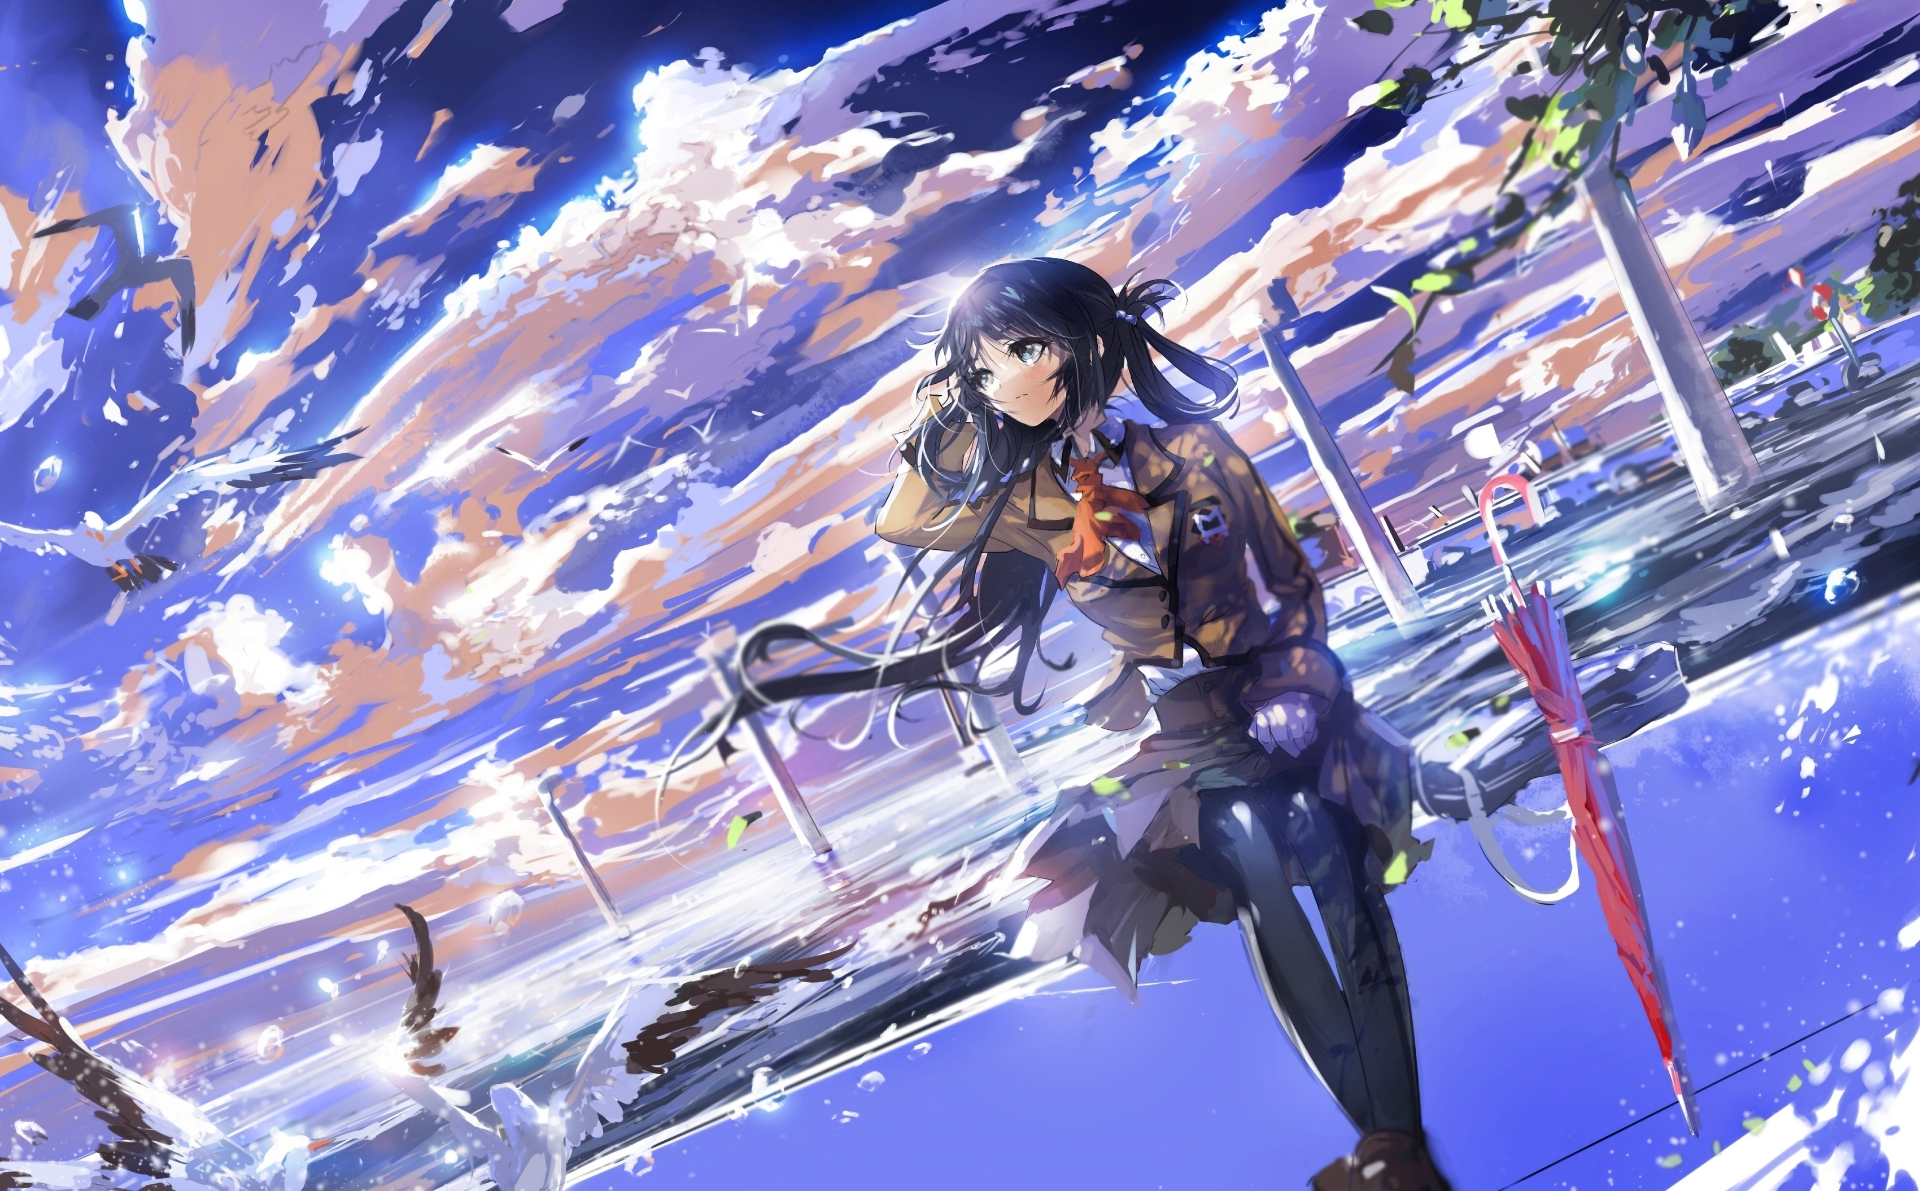 Wallpapers anime anime girls screenshot on the desktop